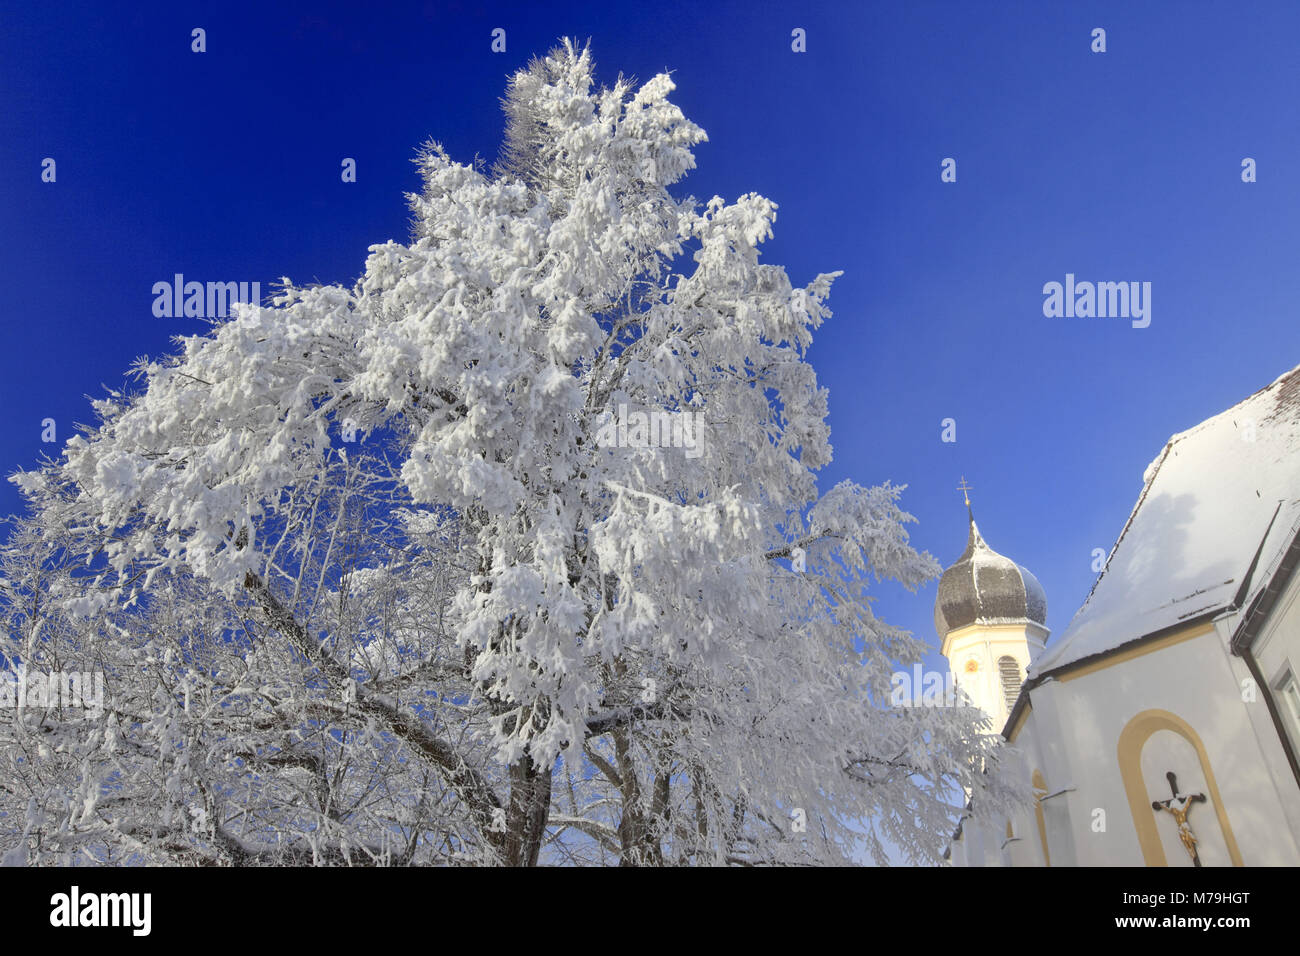 Germany, Bavaria, Upper Bavaria, Pfaffenwinkel region, Hoher Peissenberg, winter scenery, pilgrimage church Assumption Day, Stock Photo